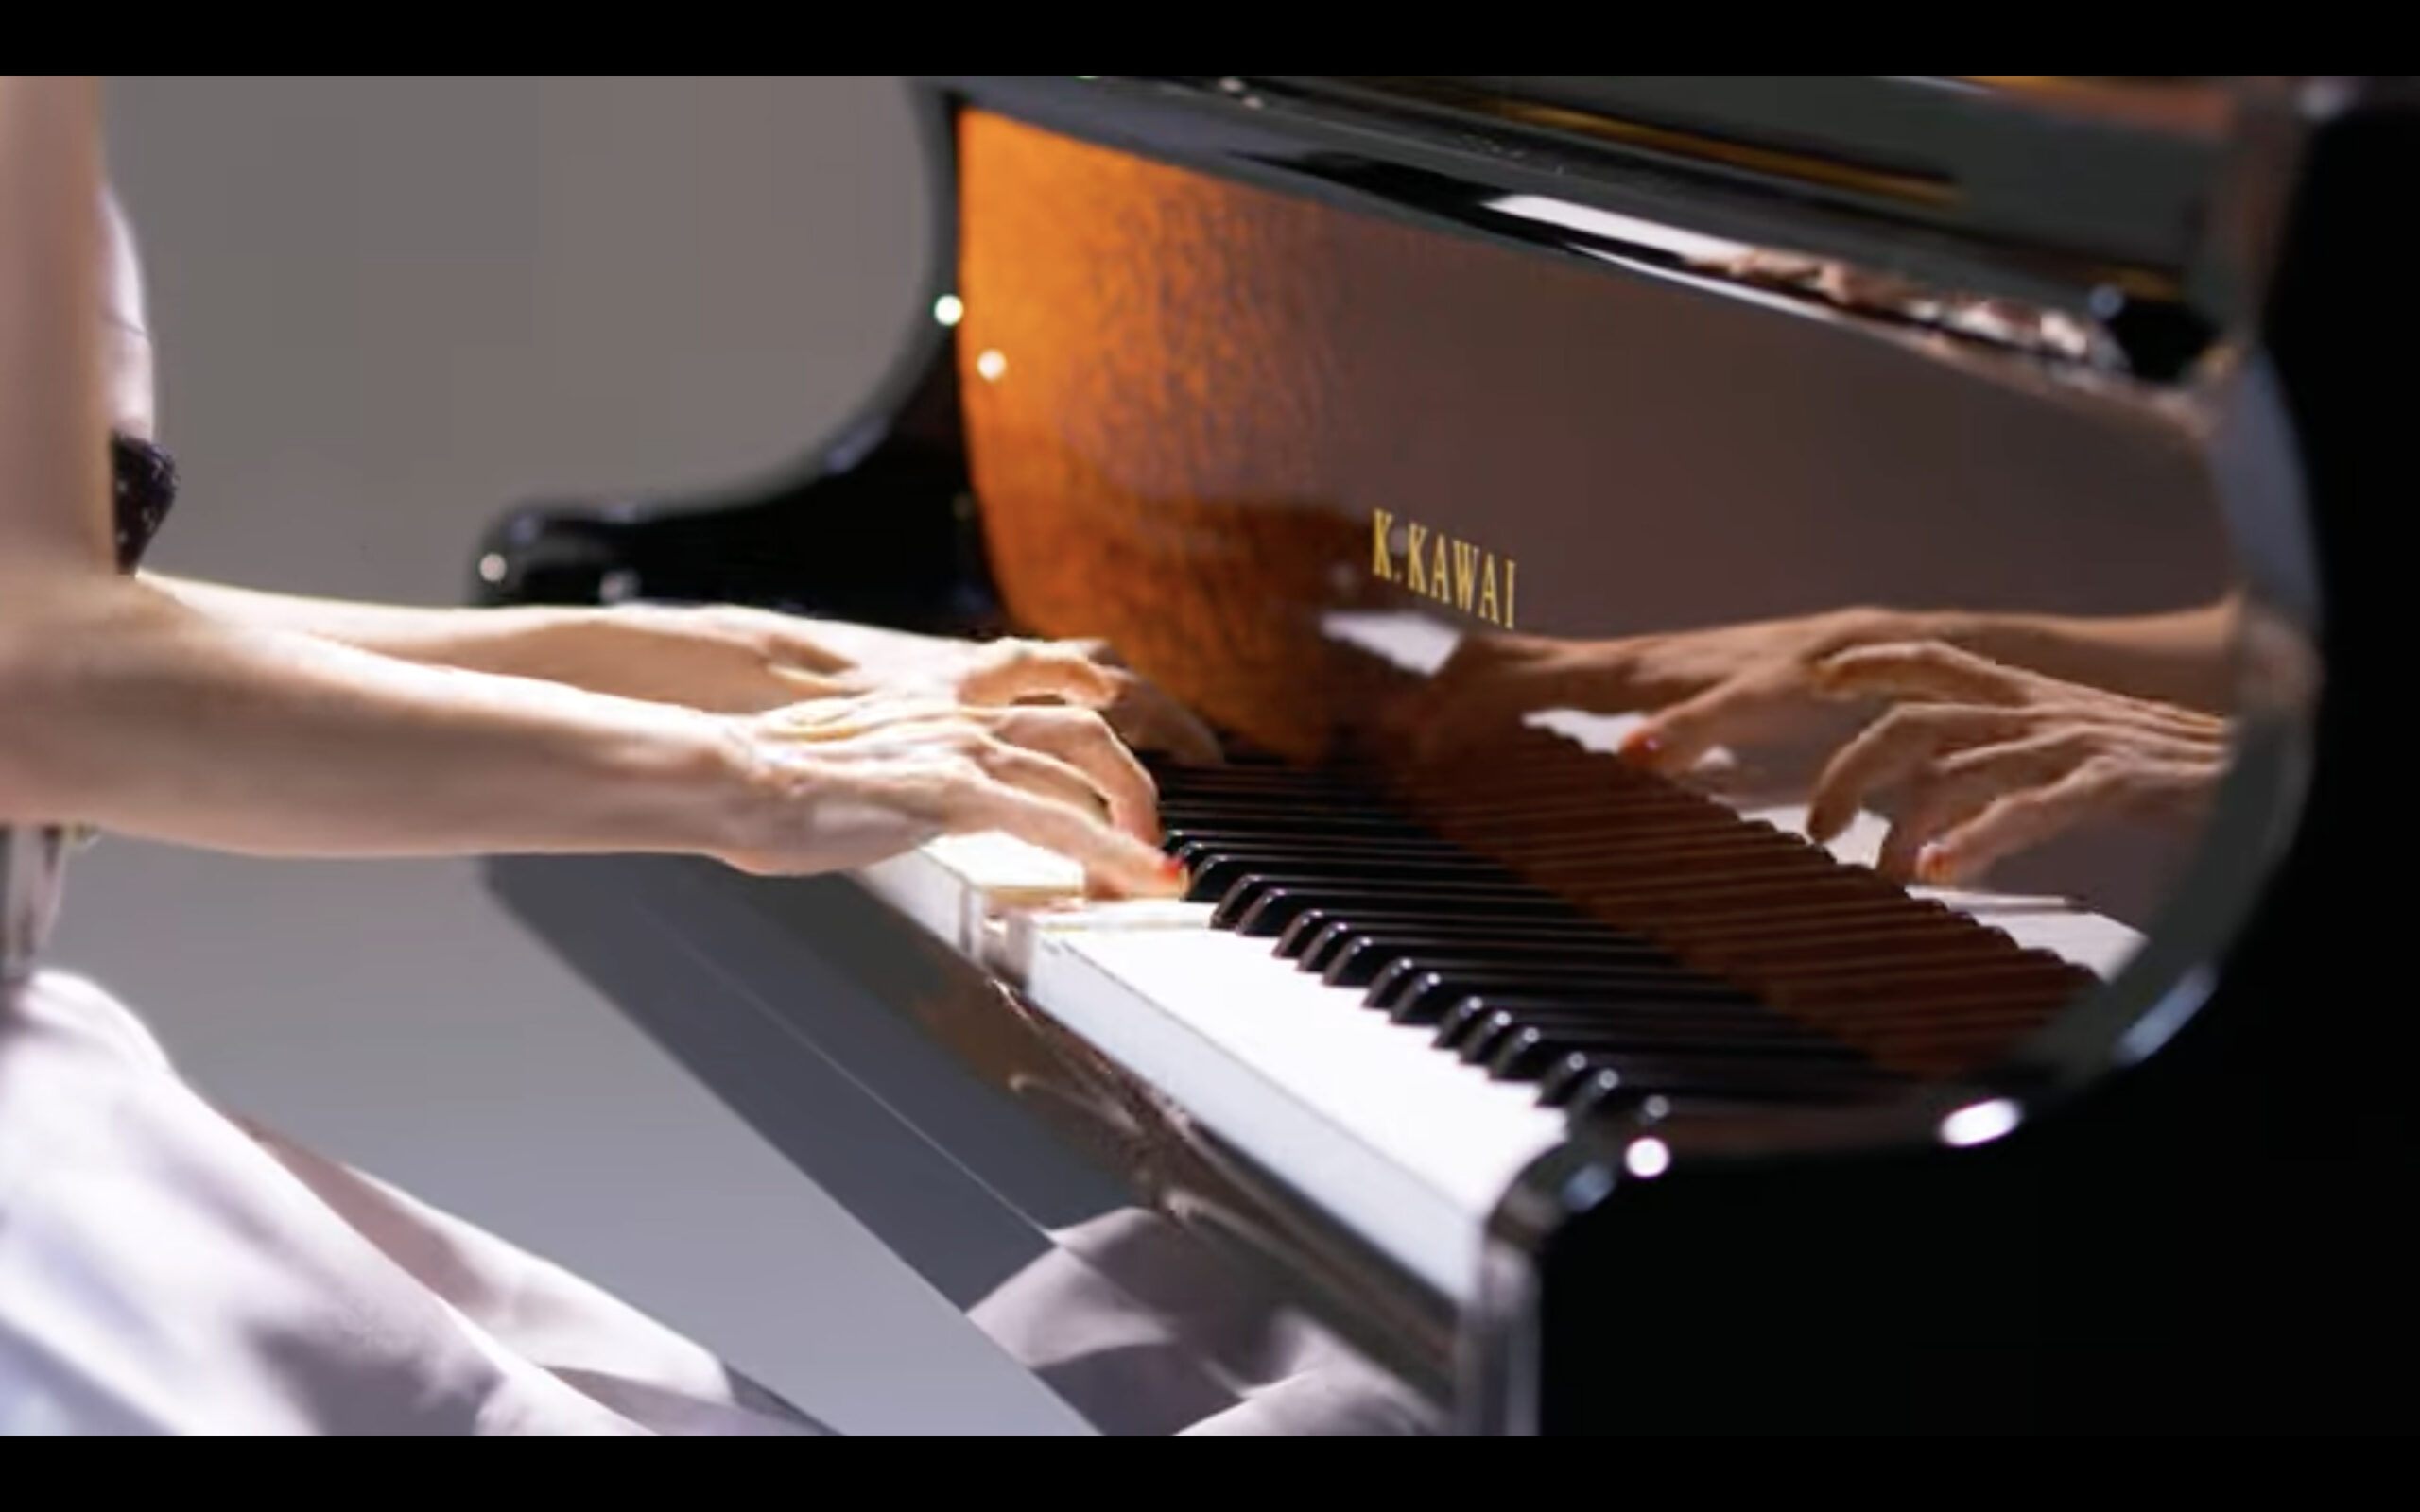 Kawai CN serires: digital home piano of the year